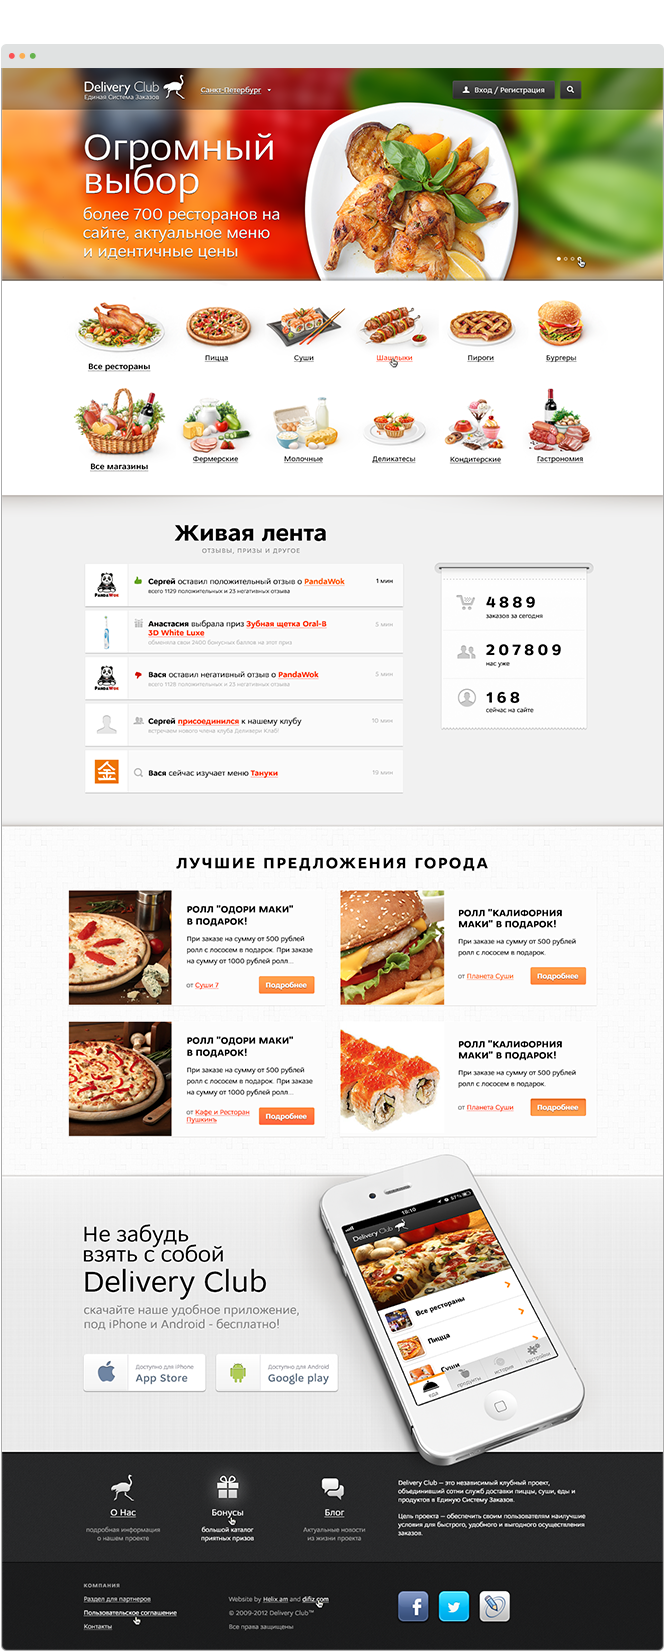 delivery club delivery club delivery-club.ru Food  Burgers Pizza Sushi sam Sam Muntean difiz food delivery delivery system Moscow Moscow food